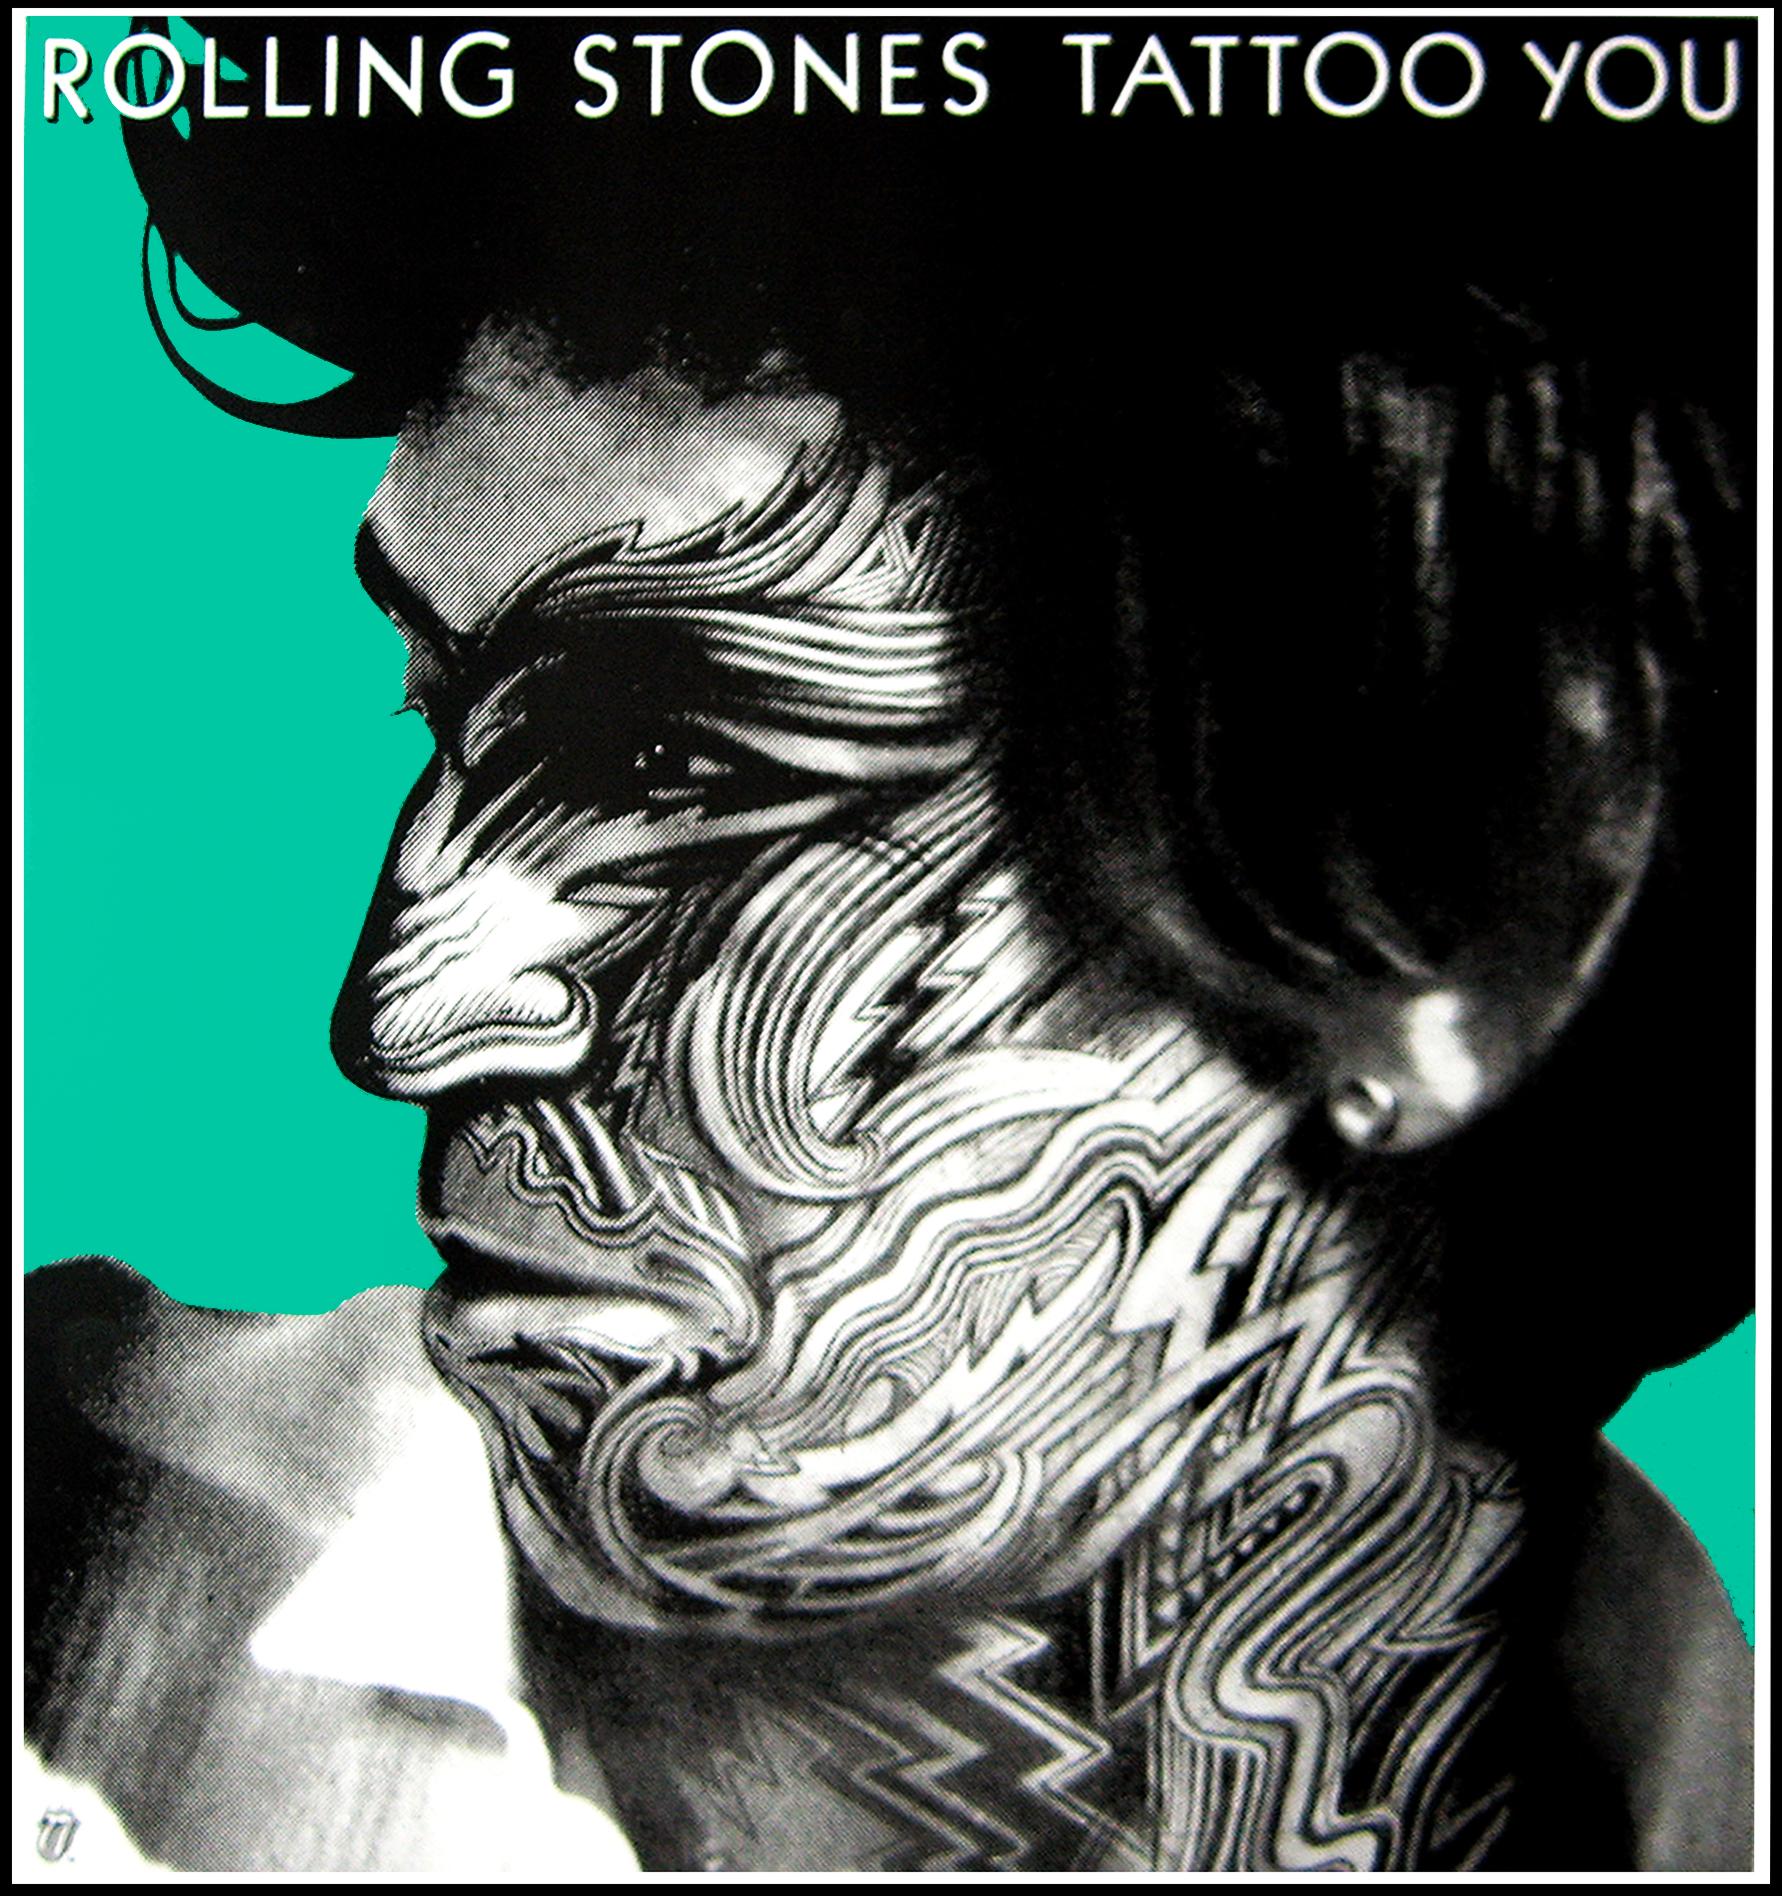 Peter Corriston Portrait Print - "Rolling Stones - Tattoo You (Keith Richards)" Original Vintage Music Poster